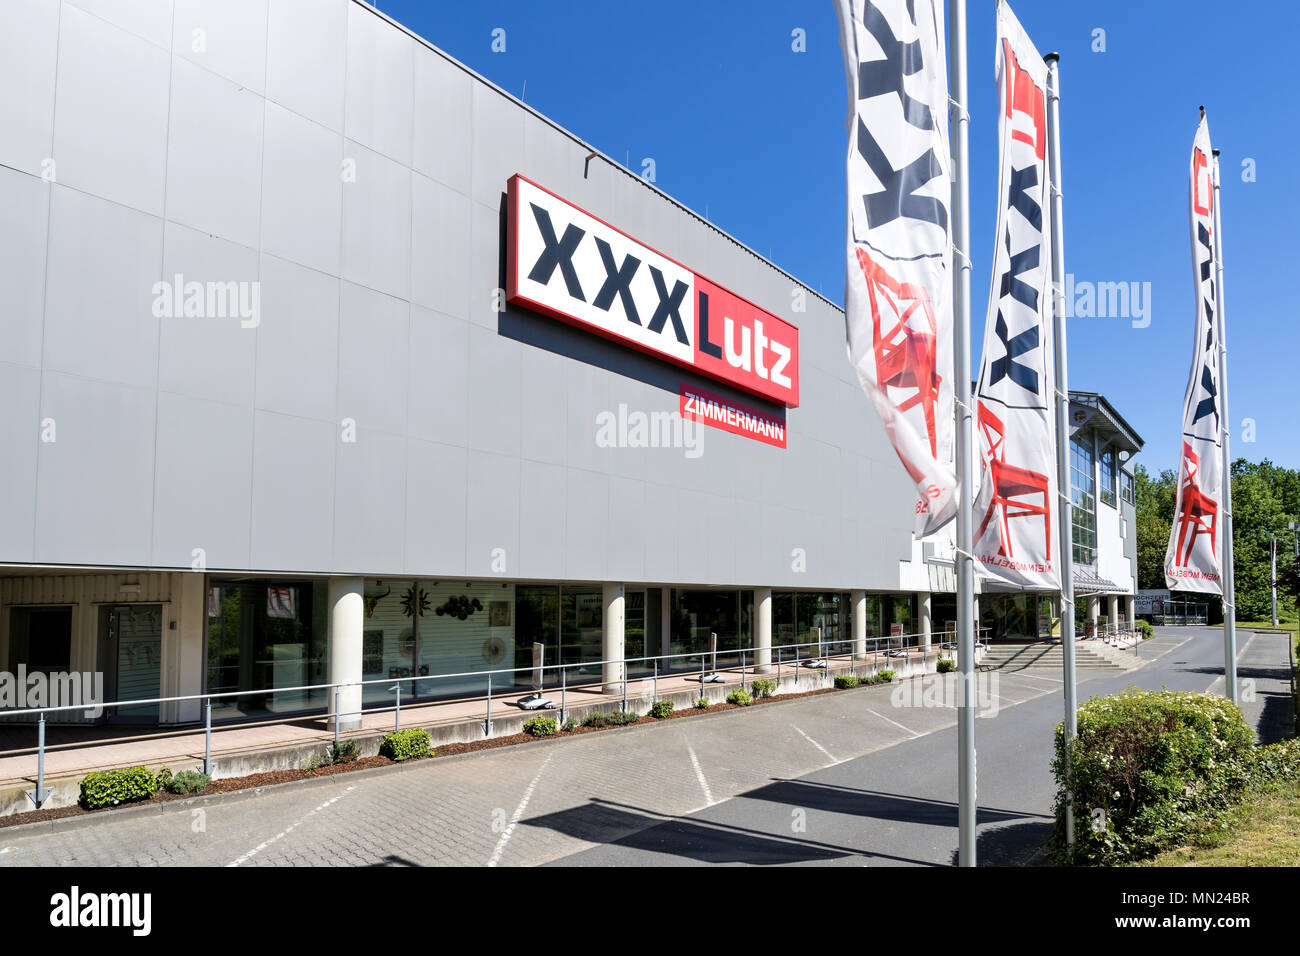 XXXLutz furniture store in Freudenberg, Germany. Austria based XXXLutz is the second largest furniture retailer in the world. Stock Photo